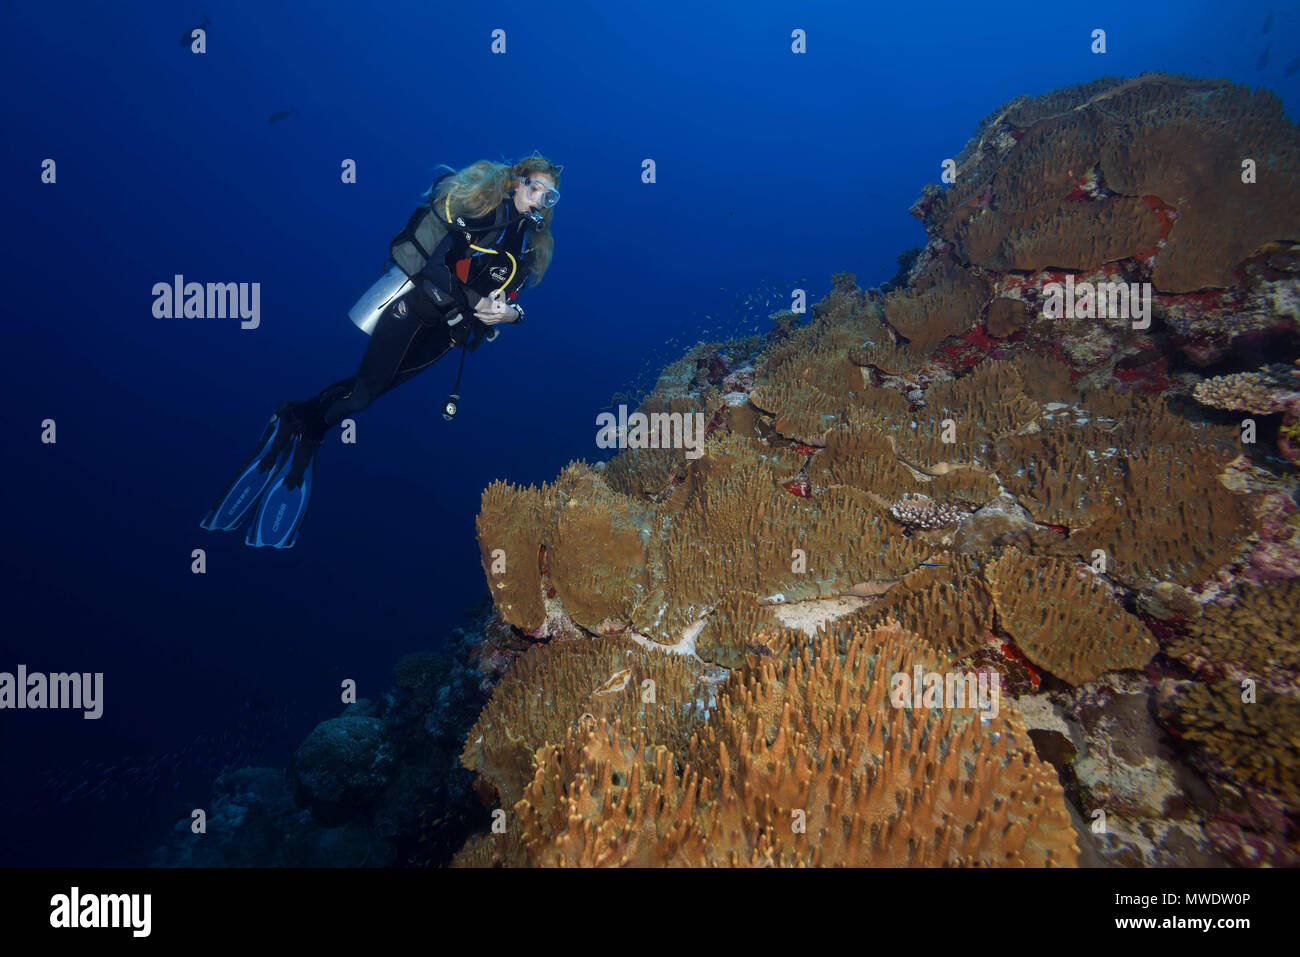 Fuvahmulah Island, Indian Ocean, Maldives. 11th Feb, 2018. Female scuba diver lool at beautiful coral reef with soft corals - Leather Coral Credit: Andrey Nekrasov/ZUMA Wire/ZUMAPRESS.com/Alamy Live News Stock Photo